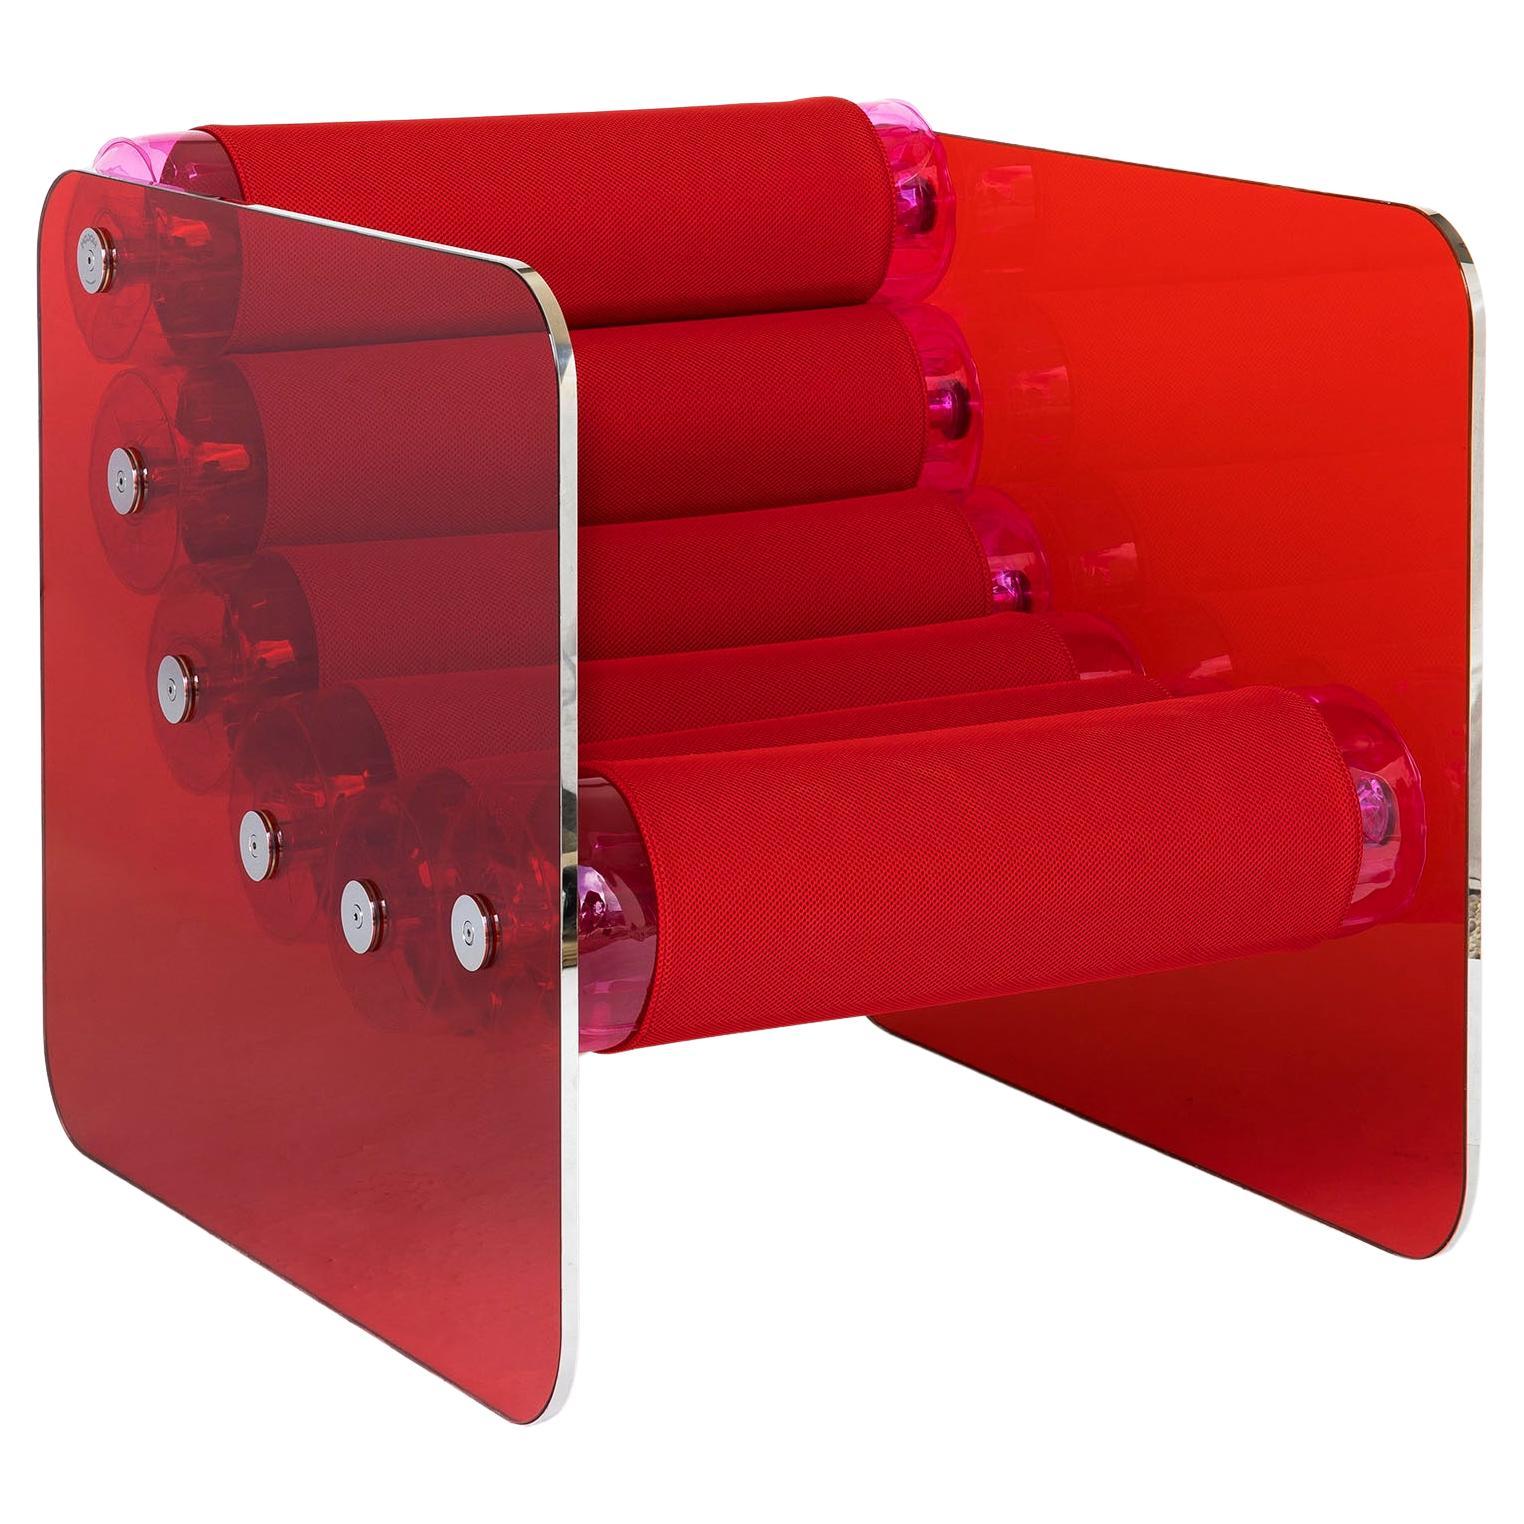 Mw02 design armchair, handmade in France by designer Olivier Santini